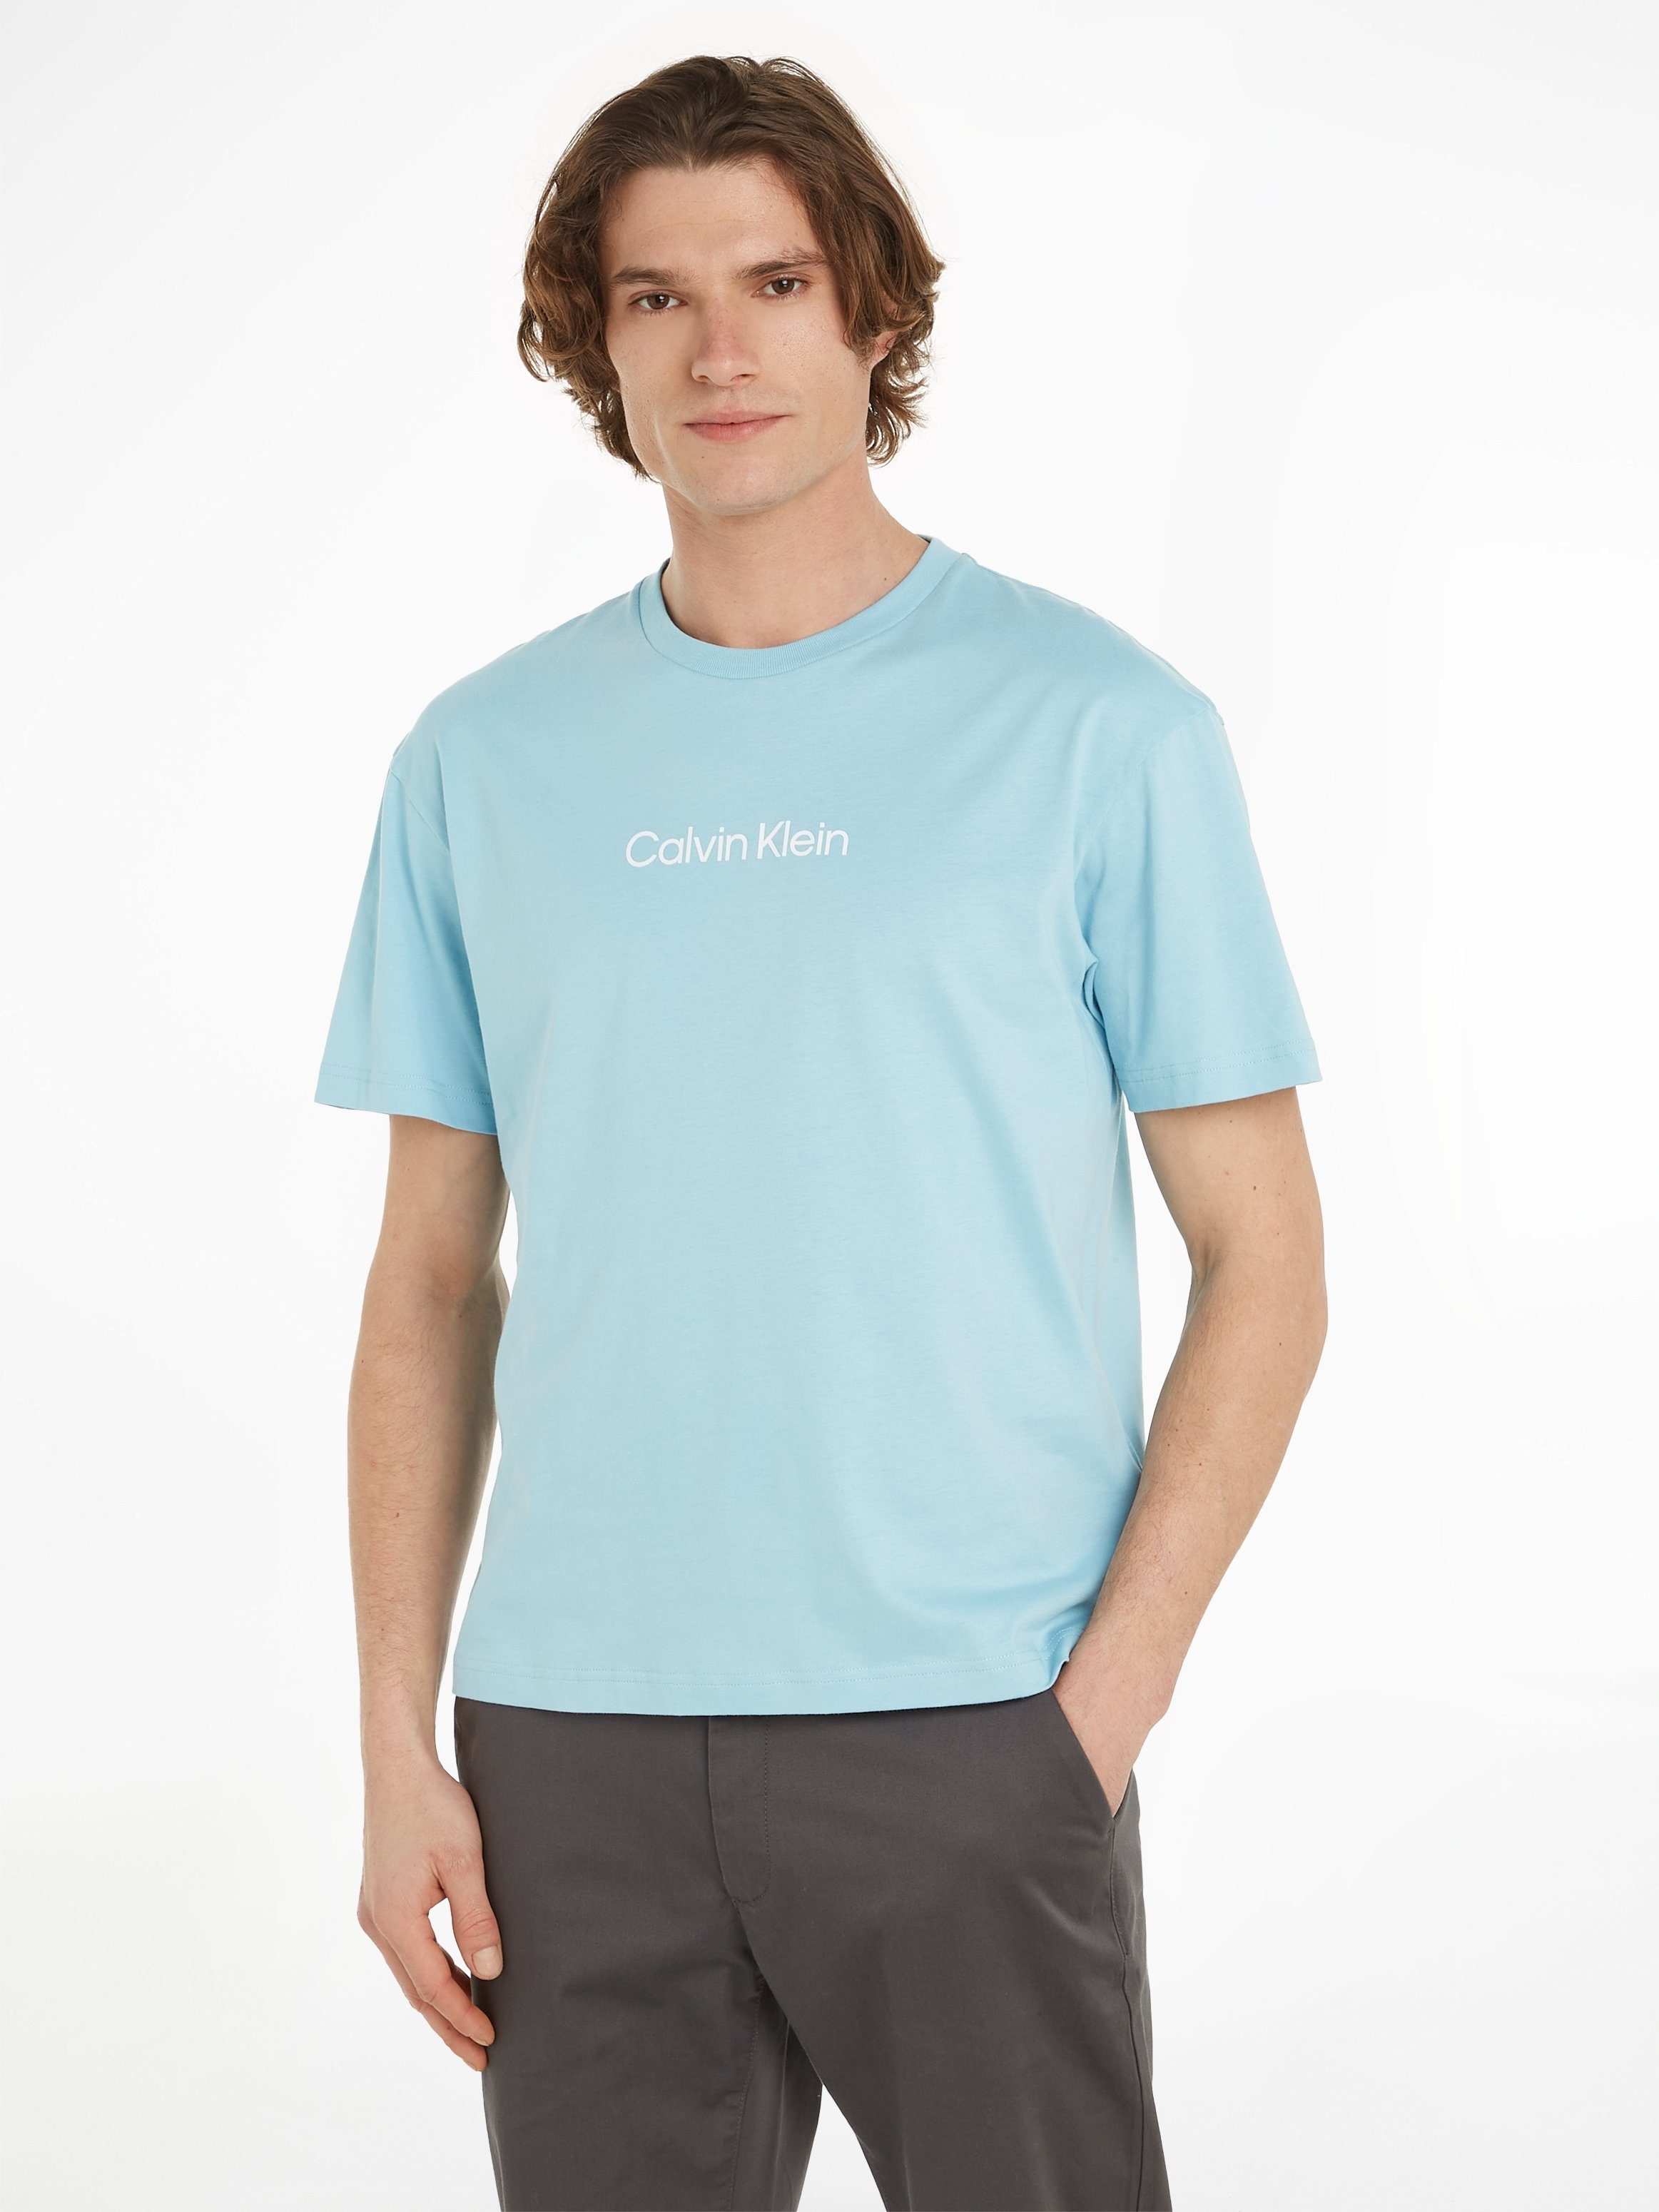 Calvin Klein T-Shirt HERO LOGO Blue aufgedrucktem mit Tropic T-SHIRT Markenlabel COMFORT